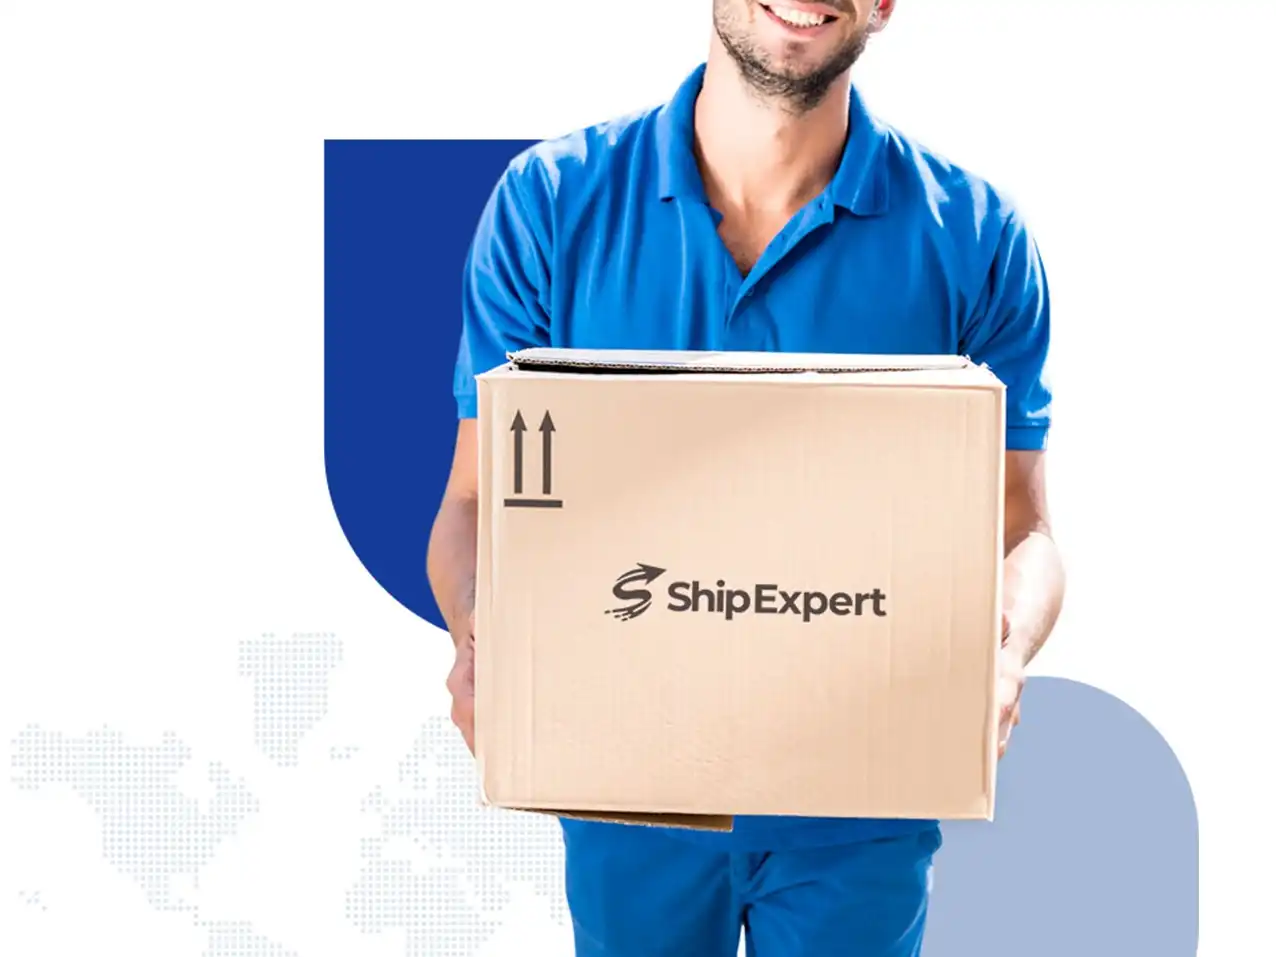 ship expert branded delivery bg